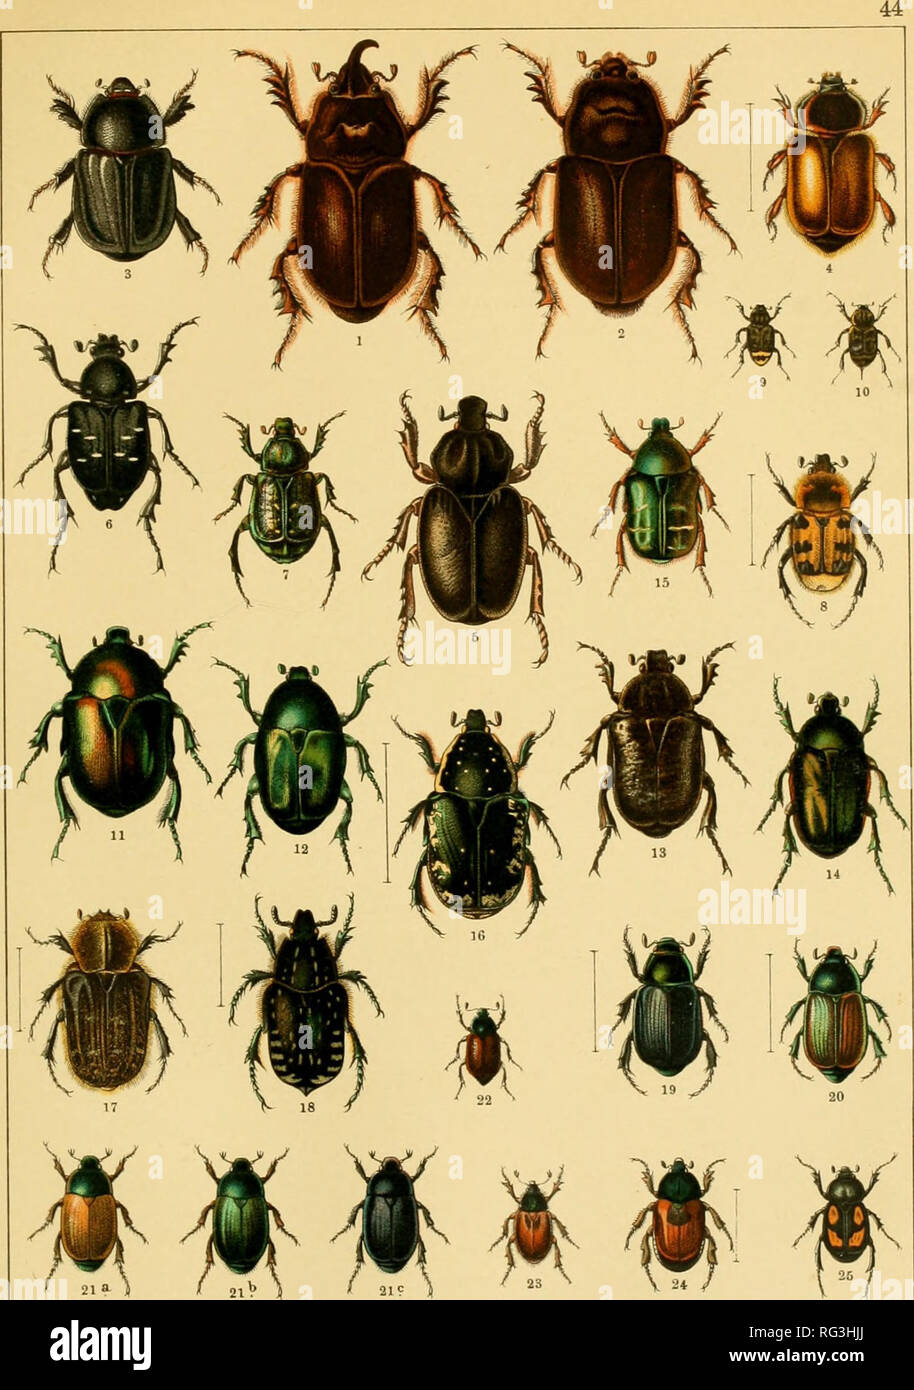 . Calwers Käferbuch; einfürhrung in die kenntnis der käfer Europas. Beetles. 21f l ü 21? J ' 319 l.Orj'cfes nasicornis cf. 2. Or. nasicornis 2- 3. Pentodon Algerinus. 4. Callicnemis Latreillei. 5. Osmoderma eremita. 6. Gnoriraus variabilis. 7. Onor. nobilis. S. Trichius fascialus. 9. Valgus hemipterus (f. 10. Valg. hemipterus $. 11. Potosia aeruginosa. 12. Pot. affinis. 13. Liocola marmorata. 14. Pol. cuprea. 15. Cetonia aurata. 16. Pot. Sibirica v. Troiana. 17. Tropinota hirta. 18. Oxylhyrea funesta. 19. Anomala aurata. 20. An. vitis. 21a. An. aenea a. c. tricolor. 21b. An. aenea. 21c. An. ae Stock Photo